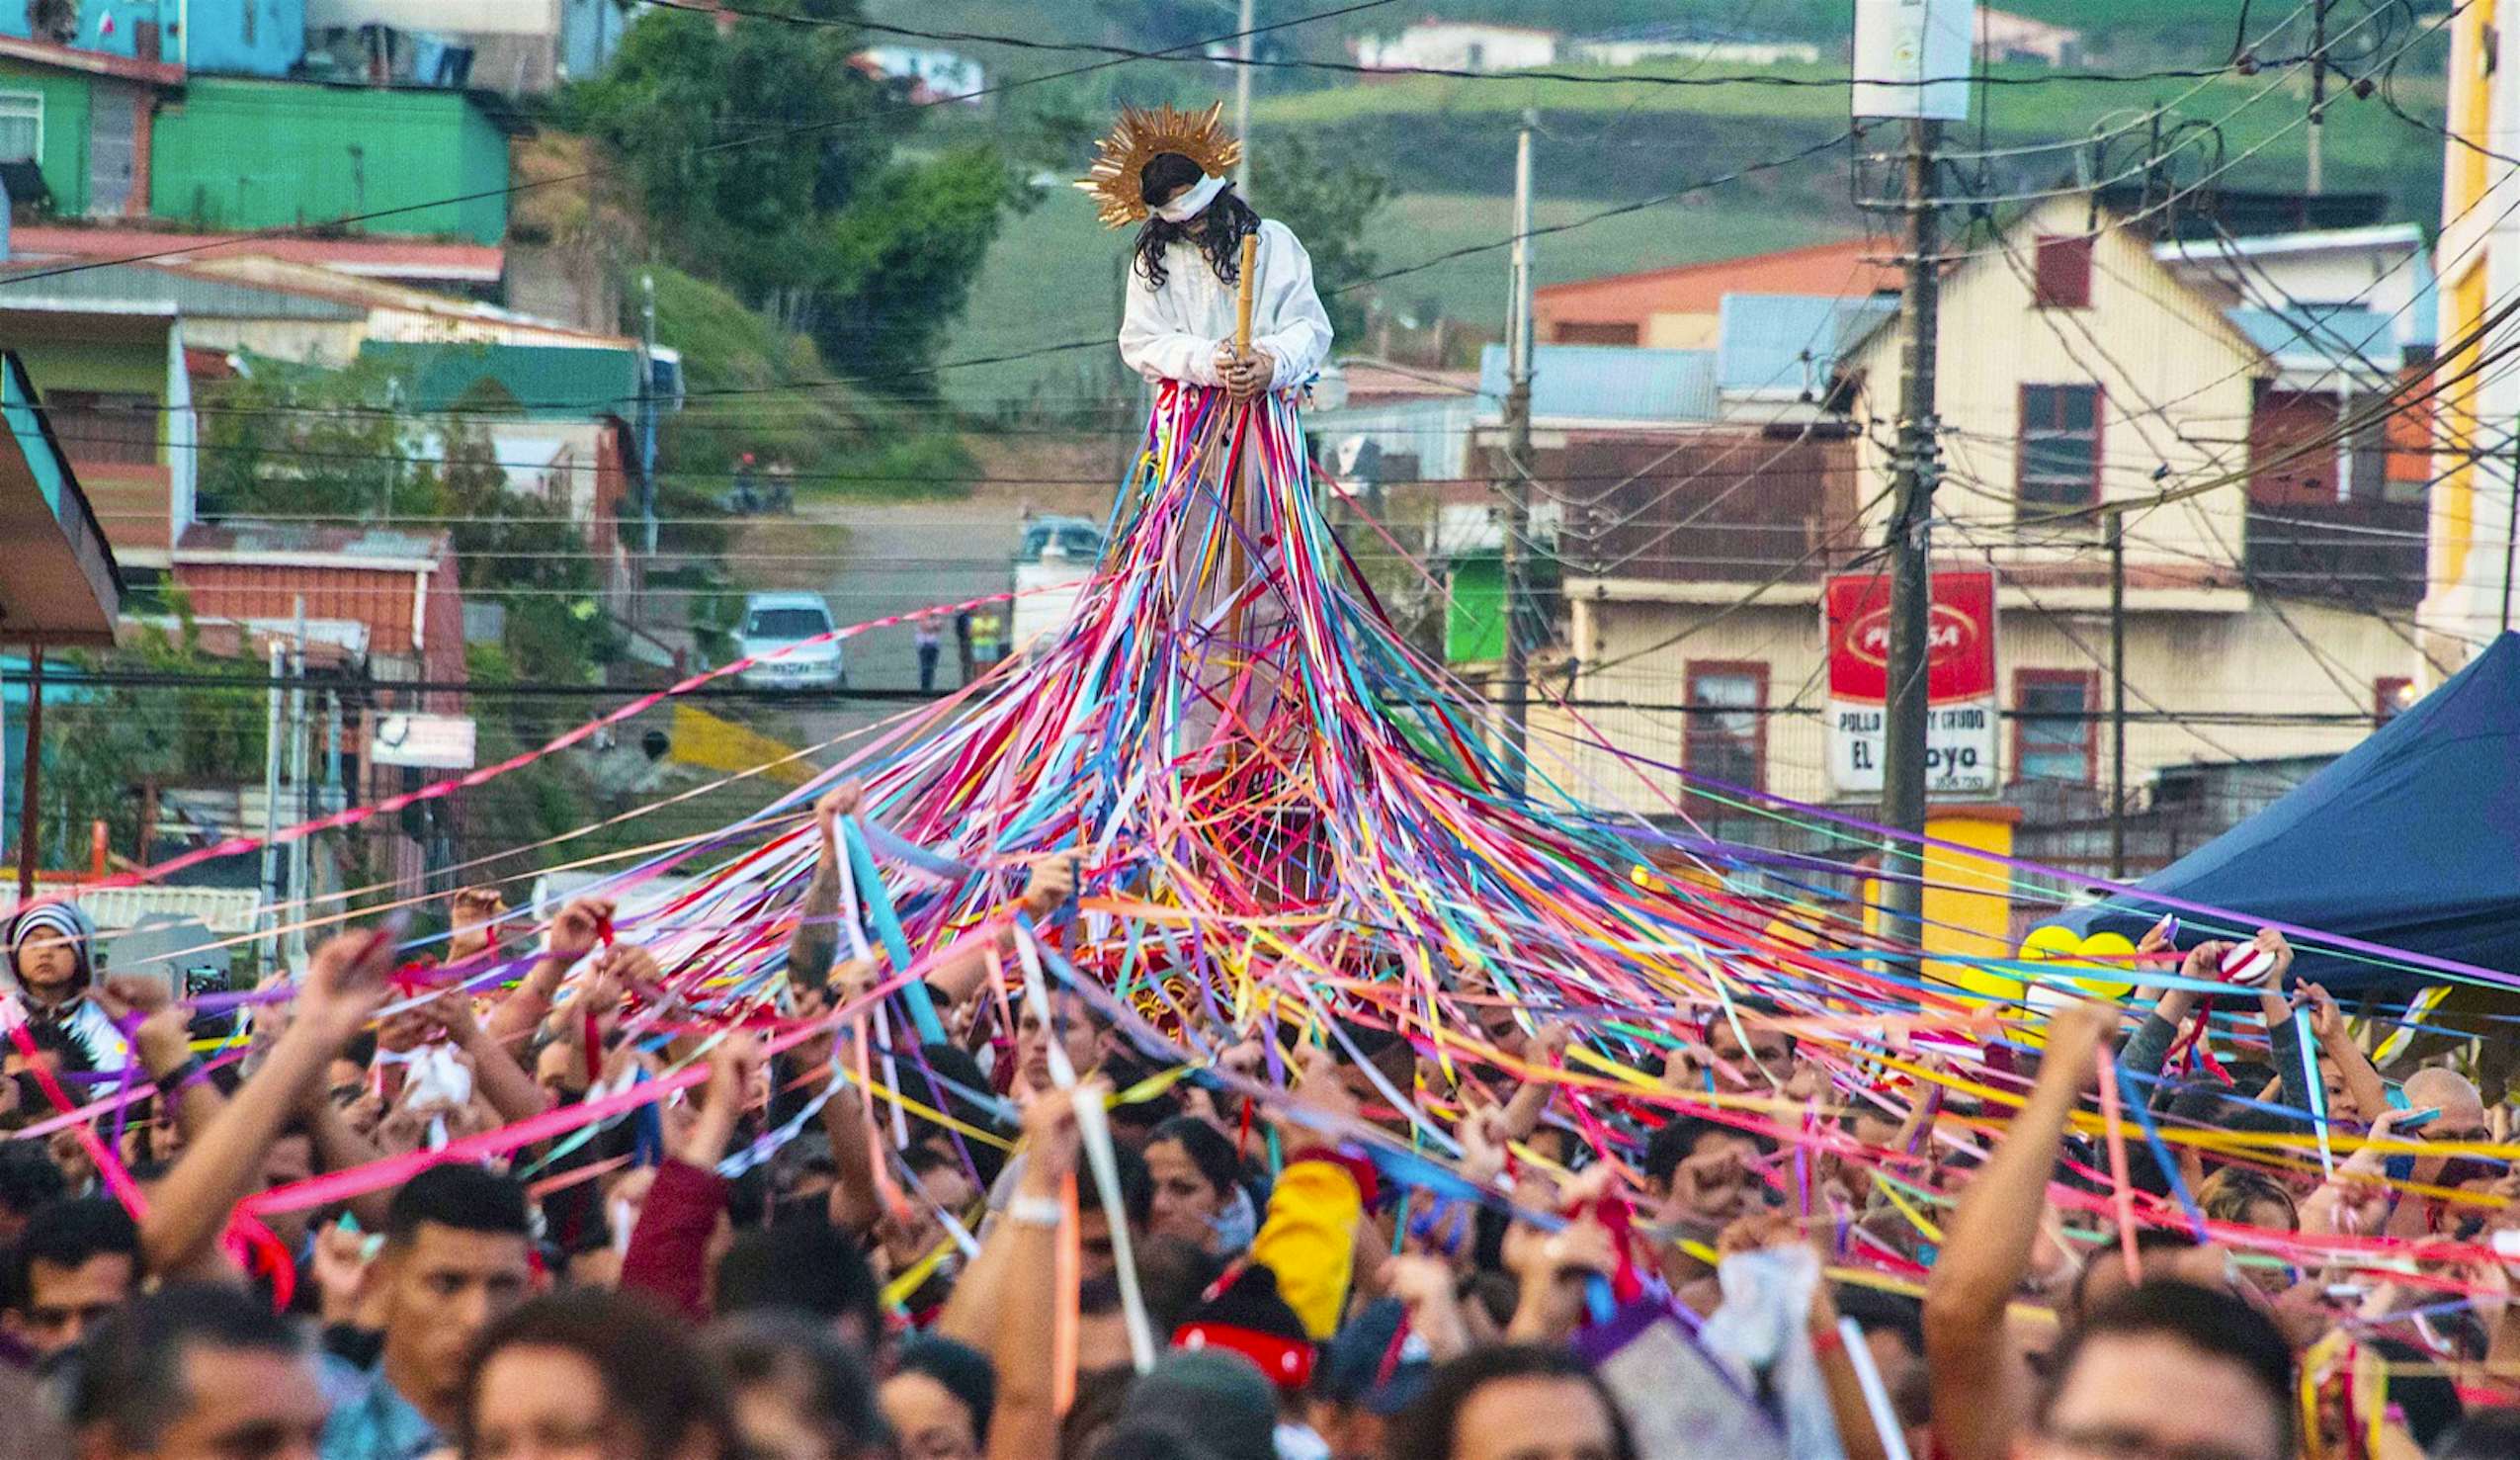 Semana Santa celebrations around Latin America and the Caribbean